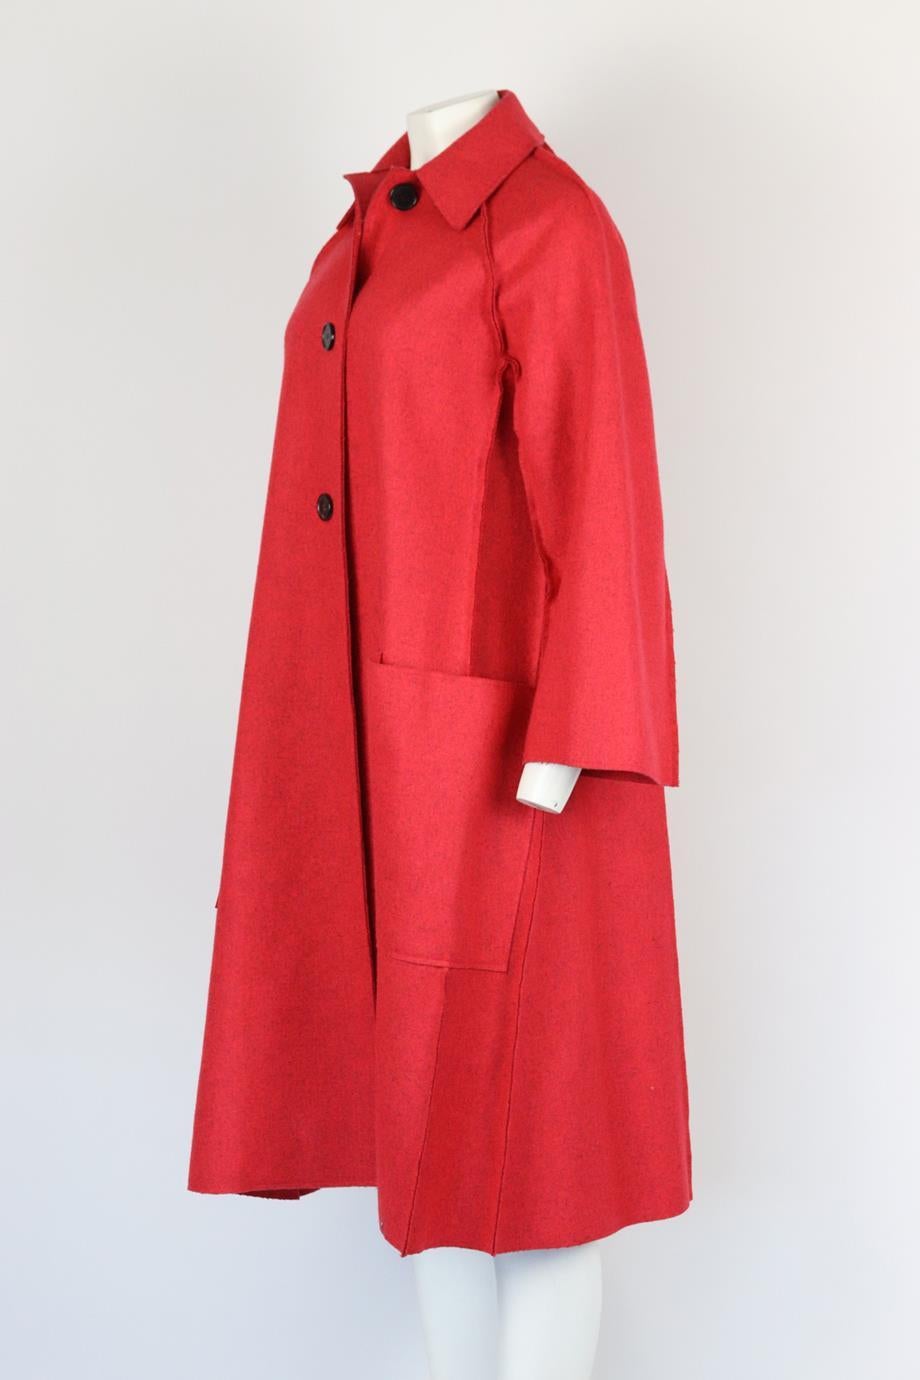 Red Christian Dior Oversized Wool Coat Fr 34 Uk 6